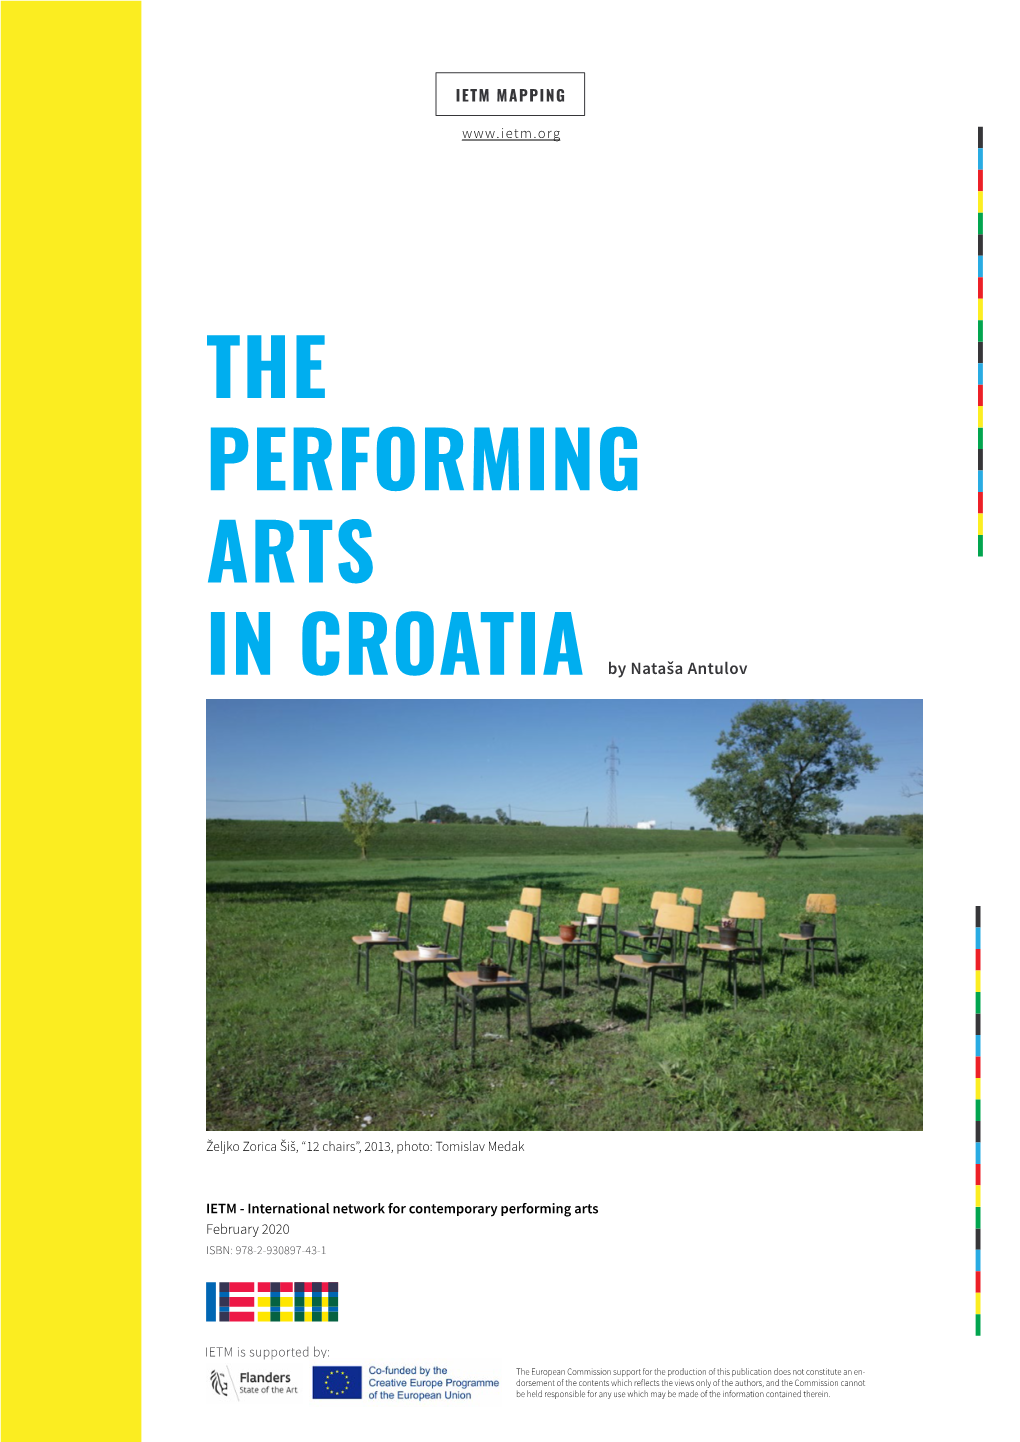 THE PERFORMING ARTS in CROATIA by Nataša Antulov